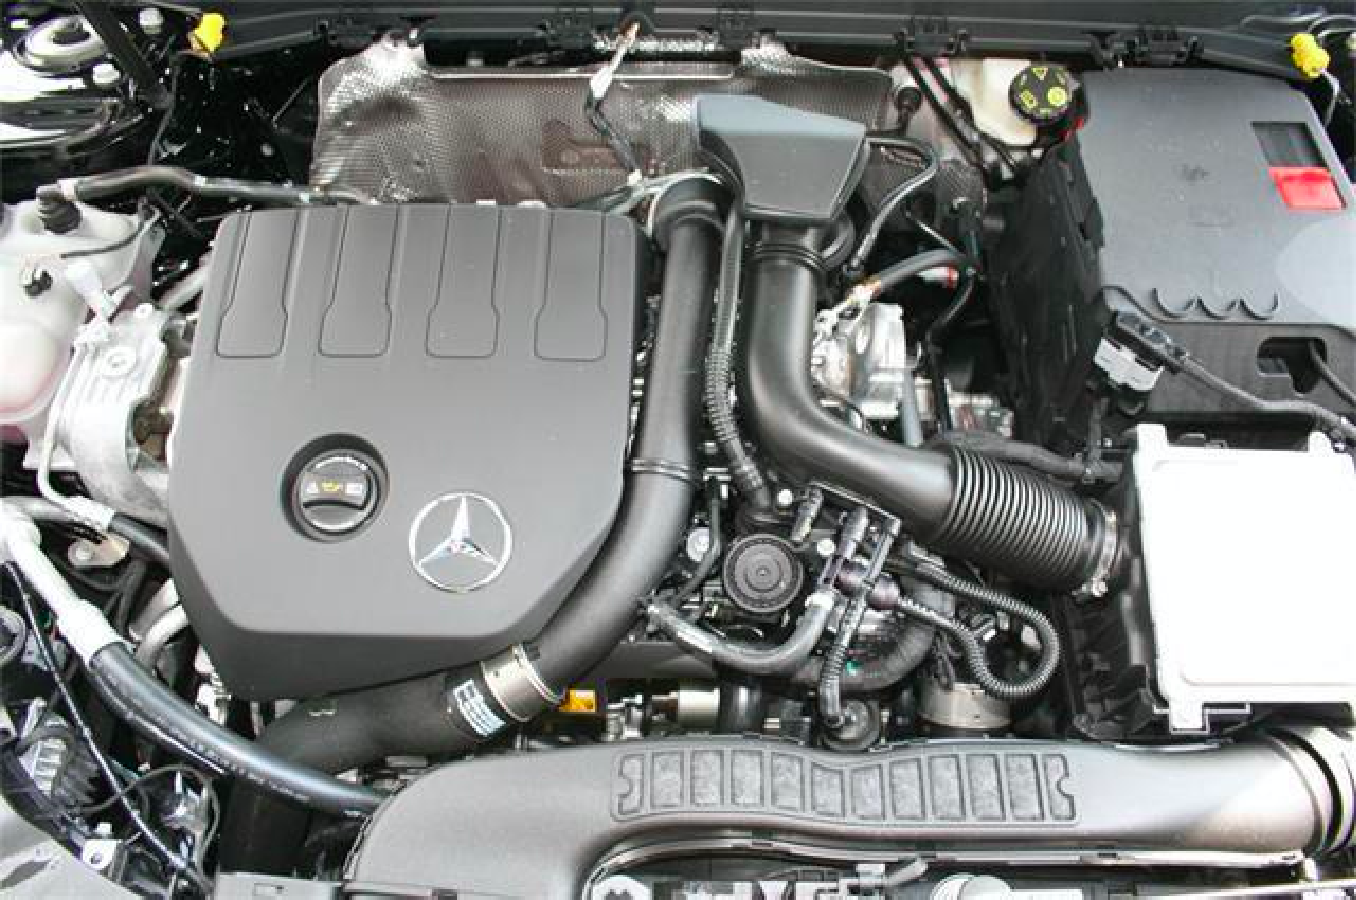 1.3 л 150 л с. Mercedes-Benz m282. Мотор Mercedes m 282. Мерседес CLA 282 мотор. Двигатель Мерседес CLA 1.3 турбо.